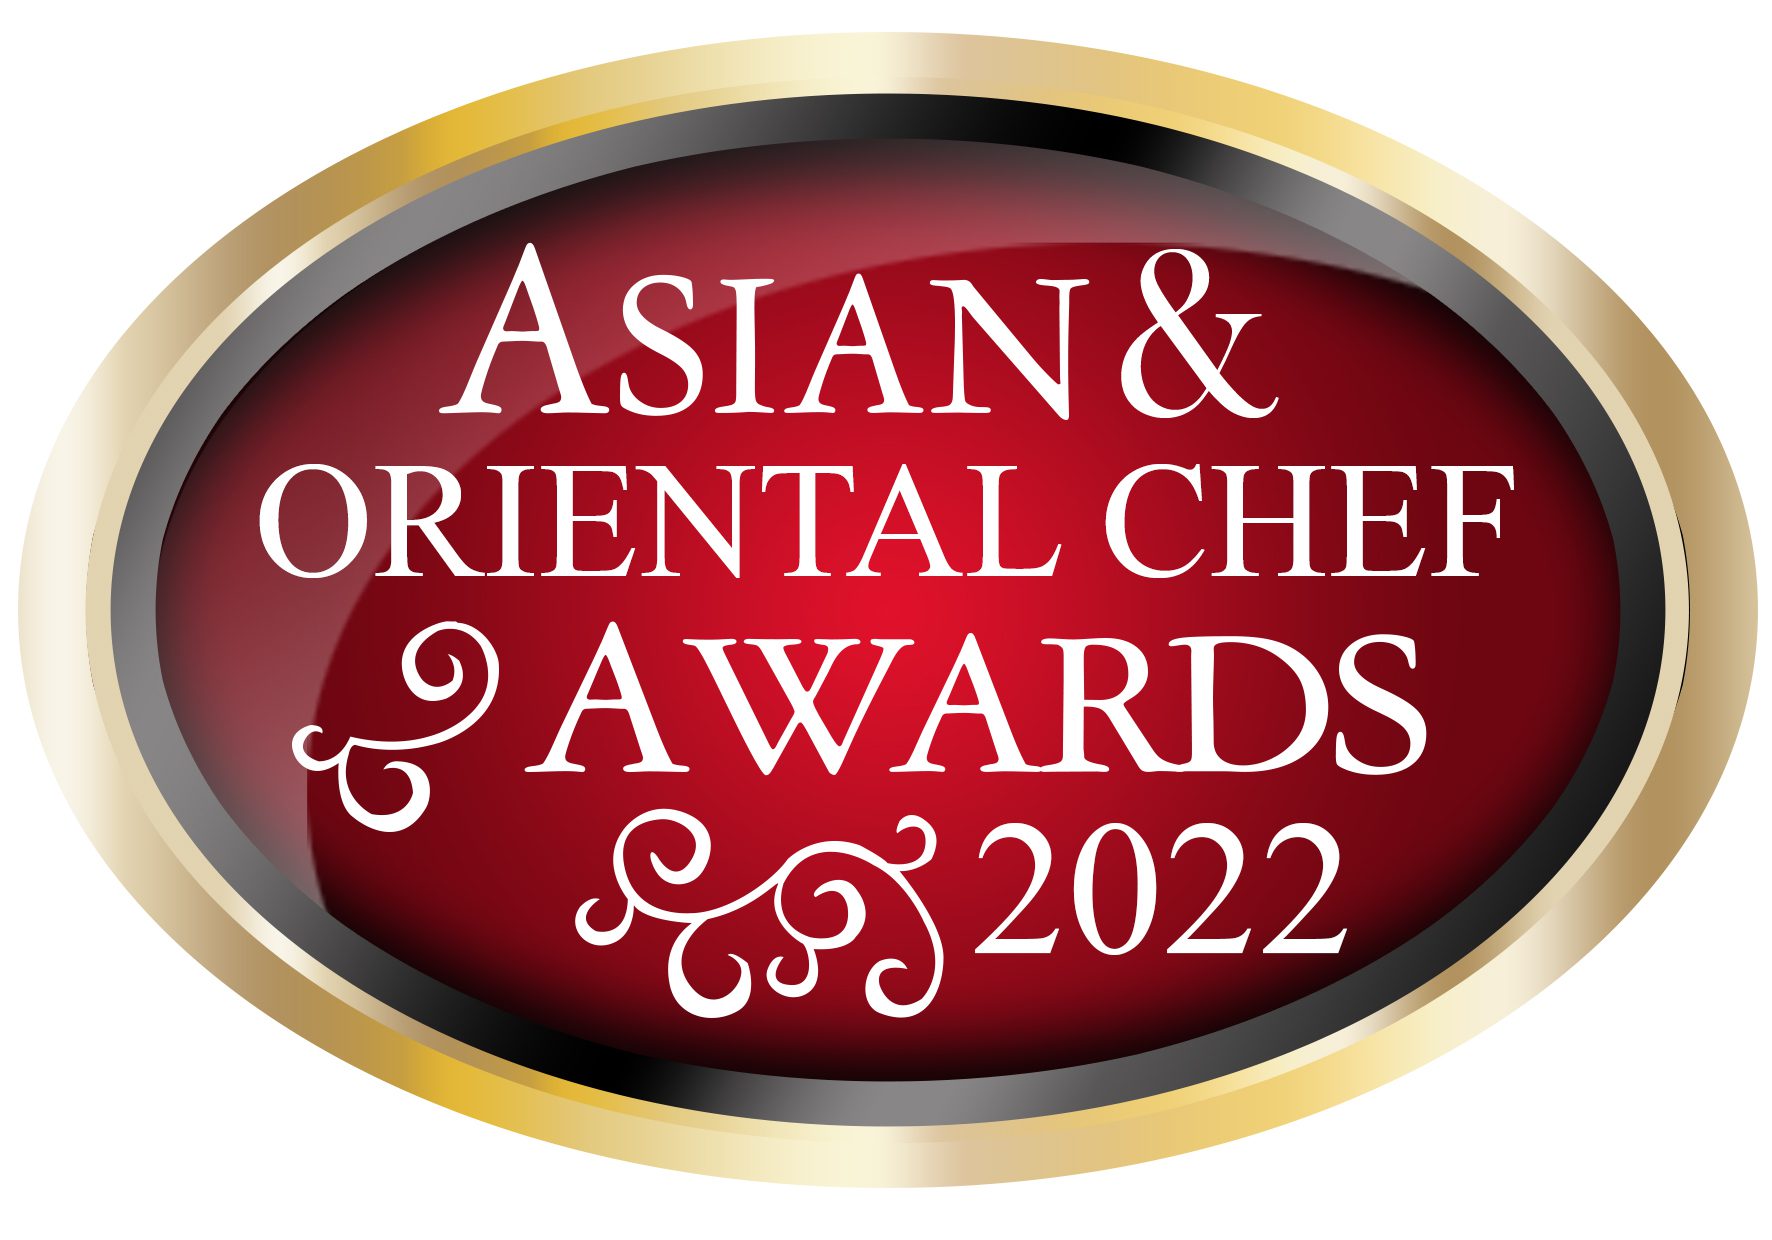 Asian Oriental Chef awards logo 2022